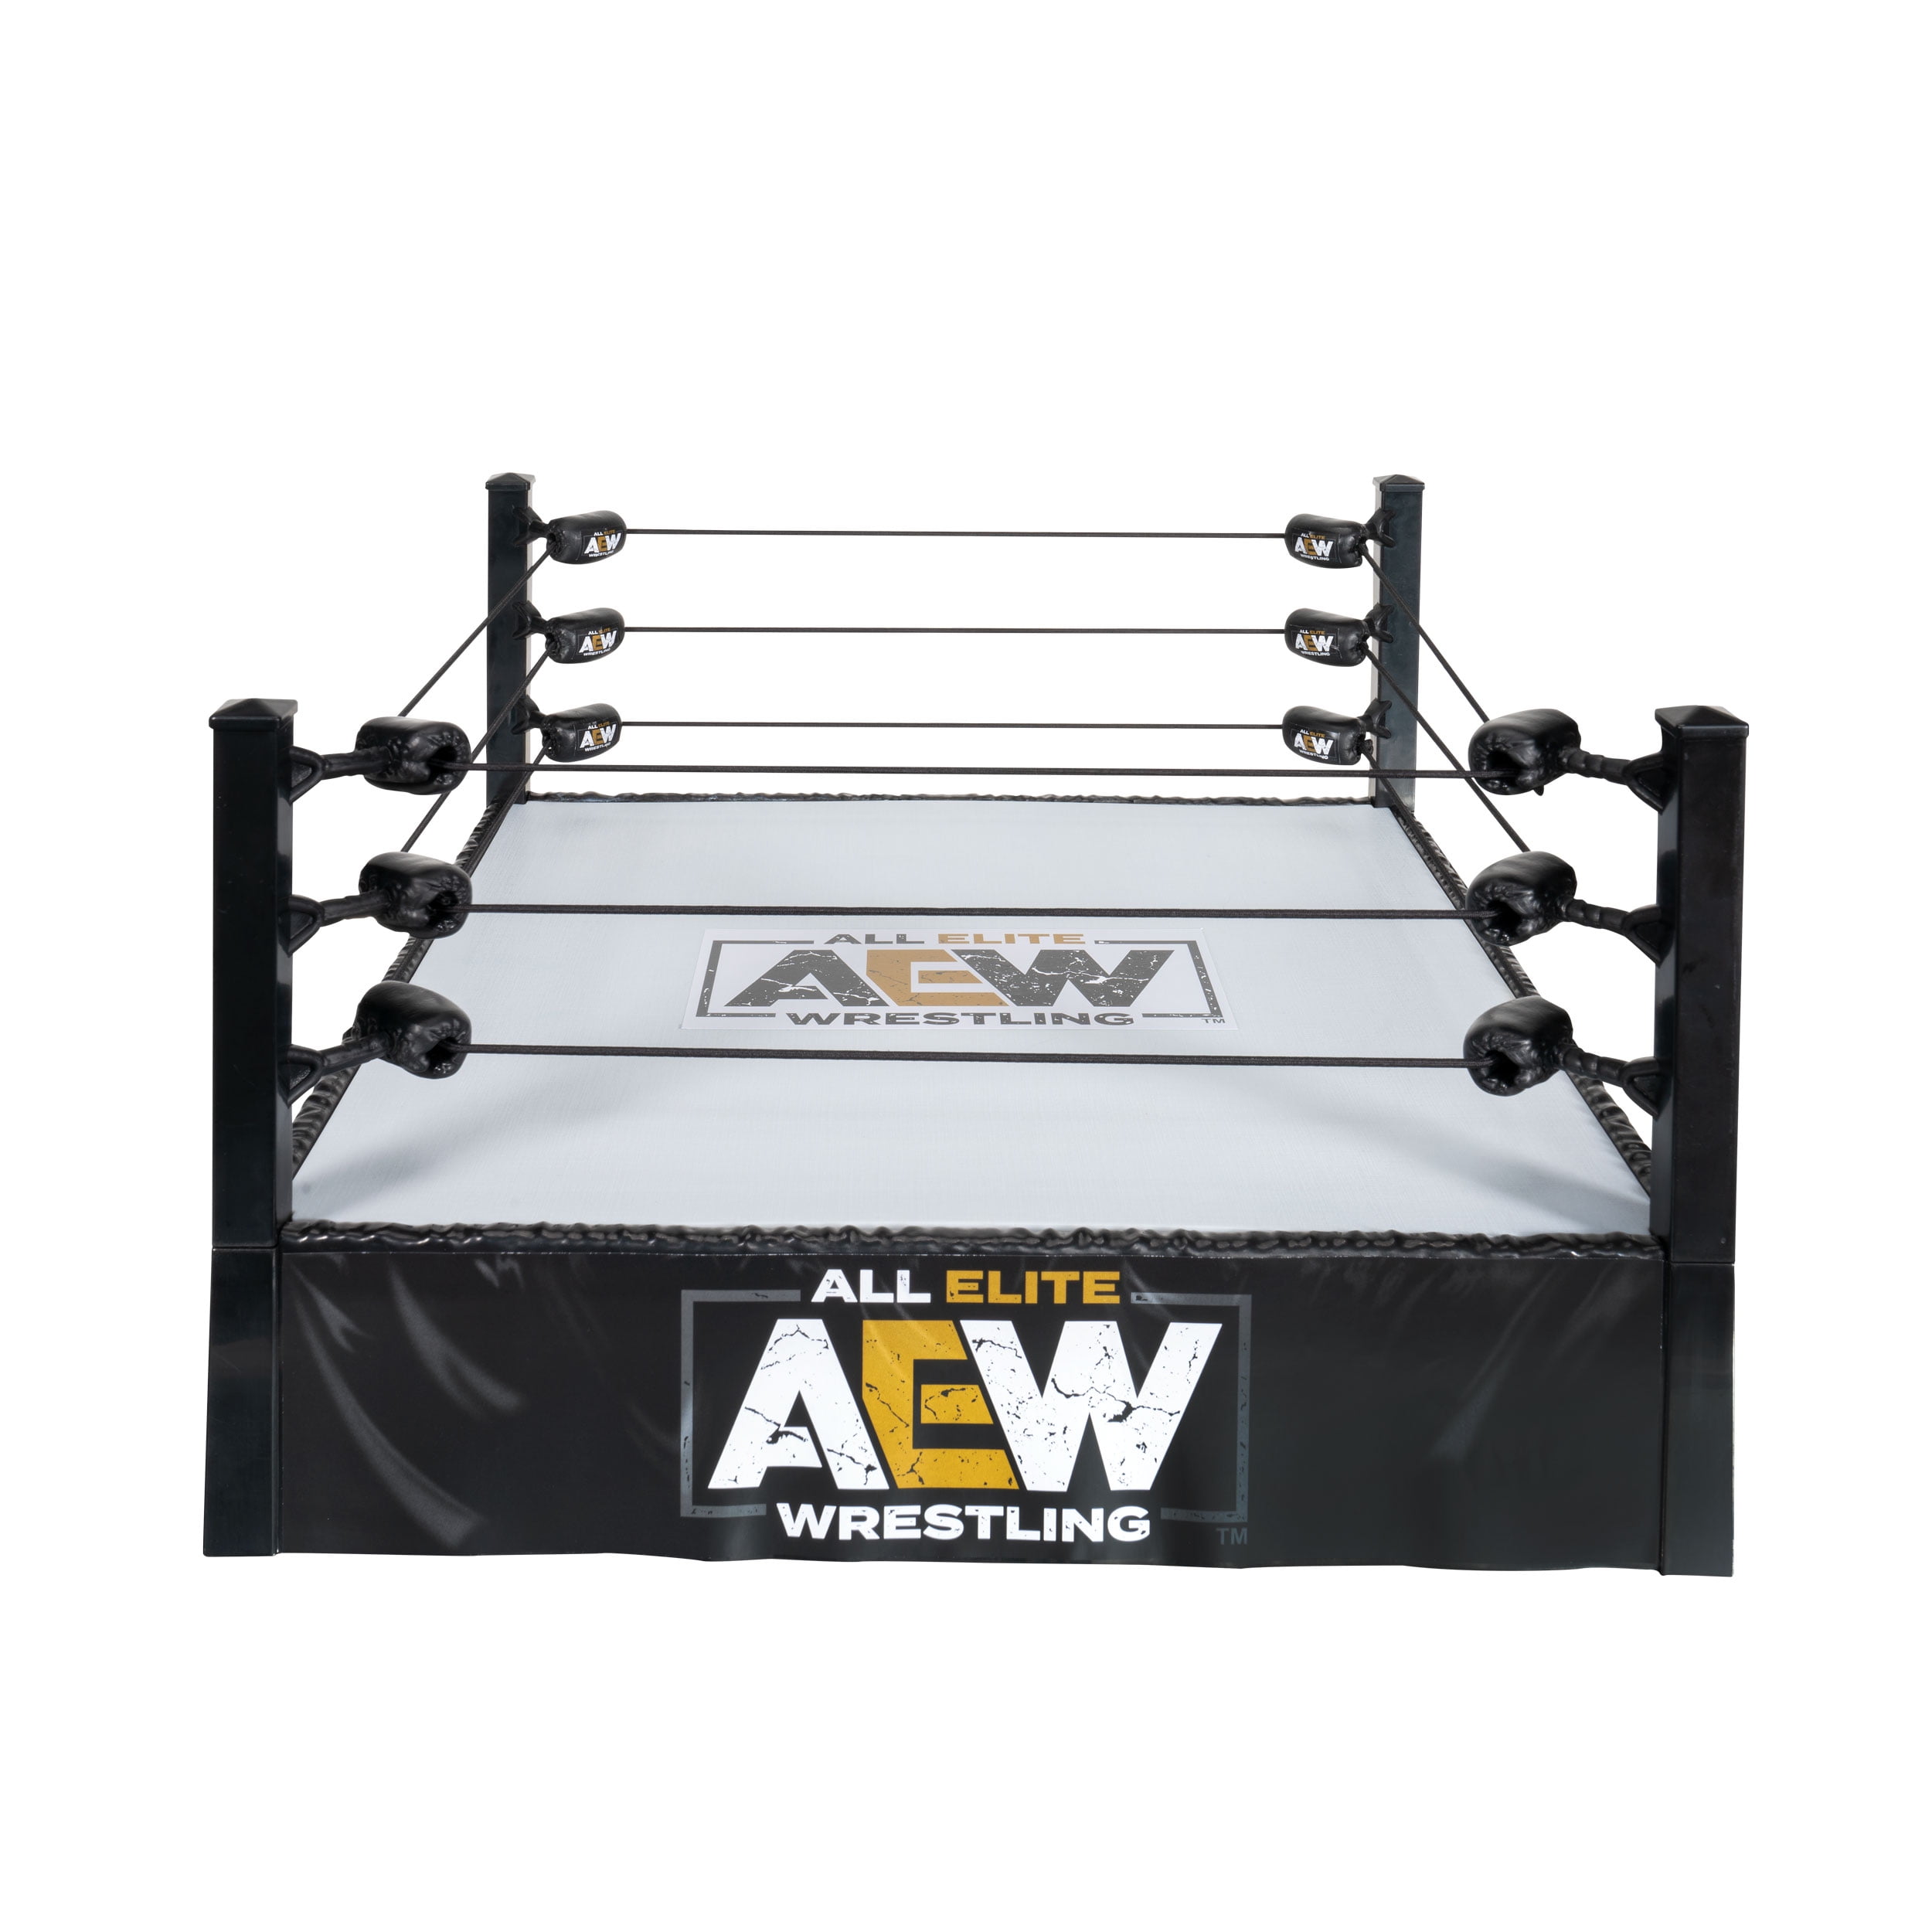 AEW UNRIVALED TOY WRESTLING RING NEW MATTEL ELITE BASIC SERIES Figure ACTION WWE 